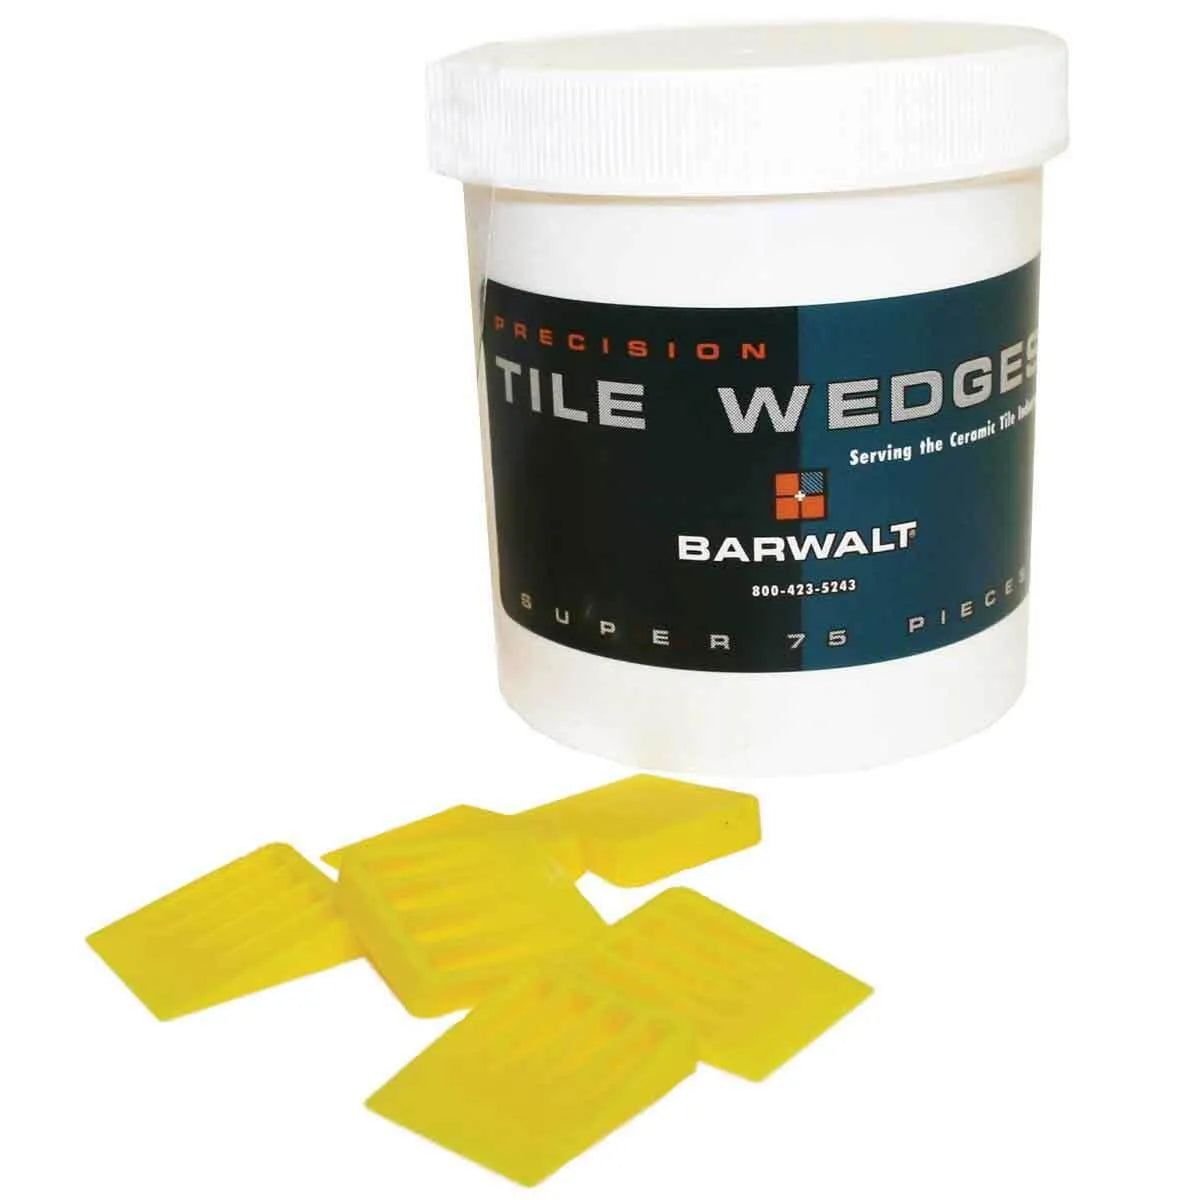 Barwalt Precision Tile Wedges